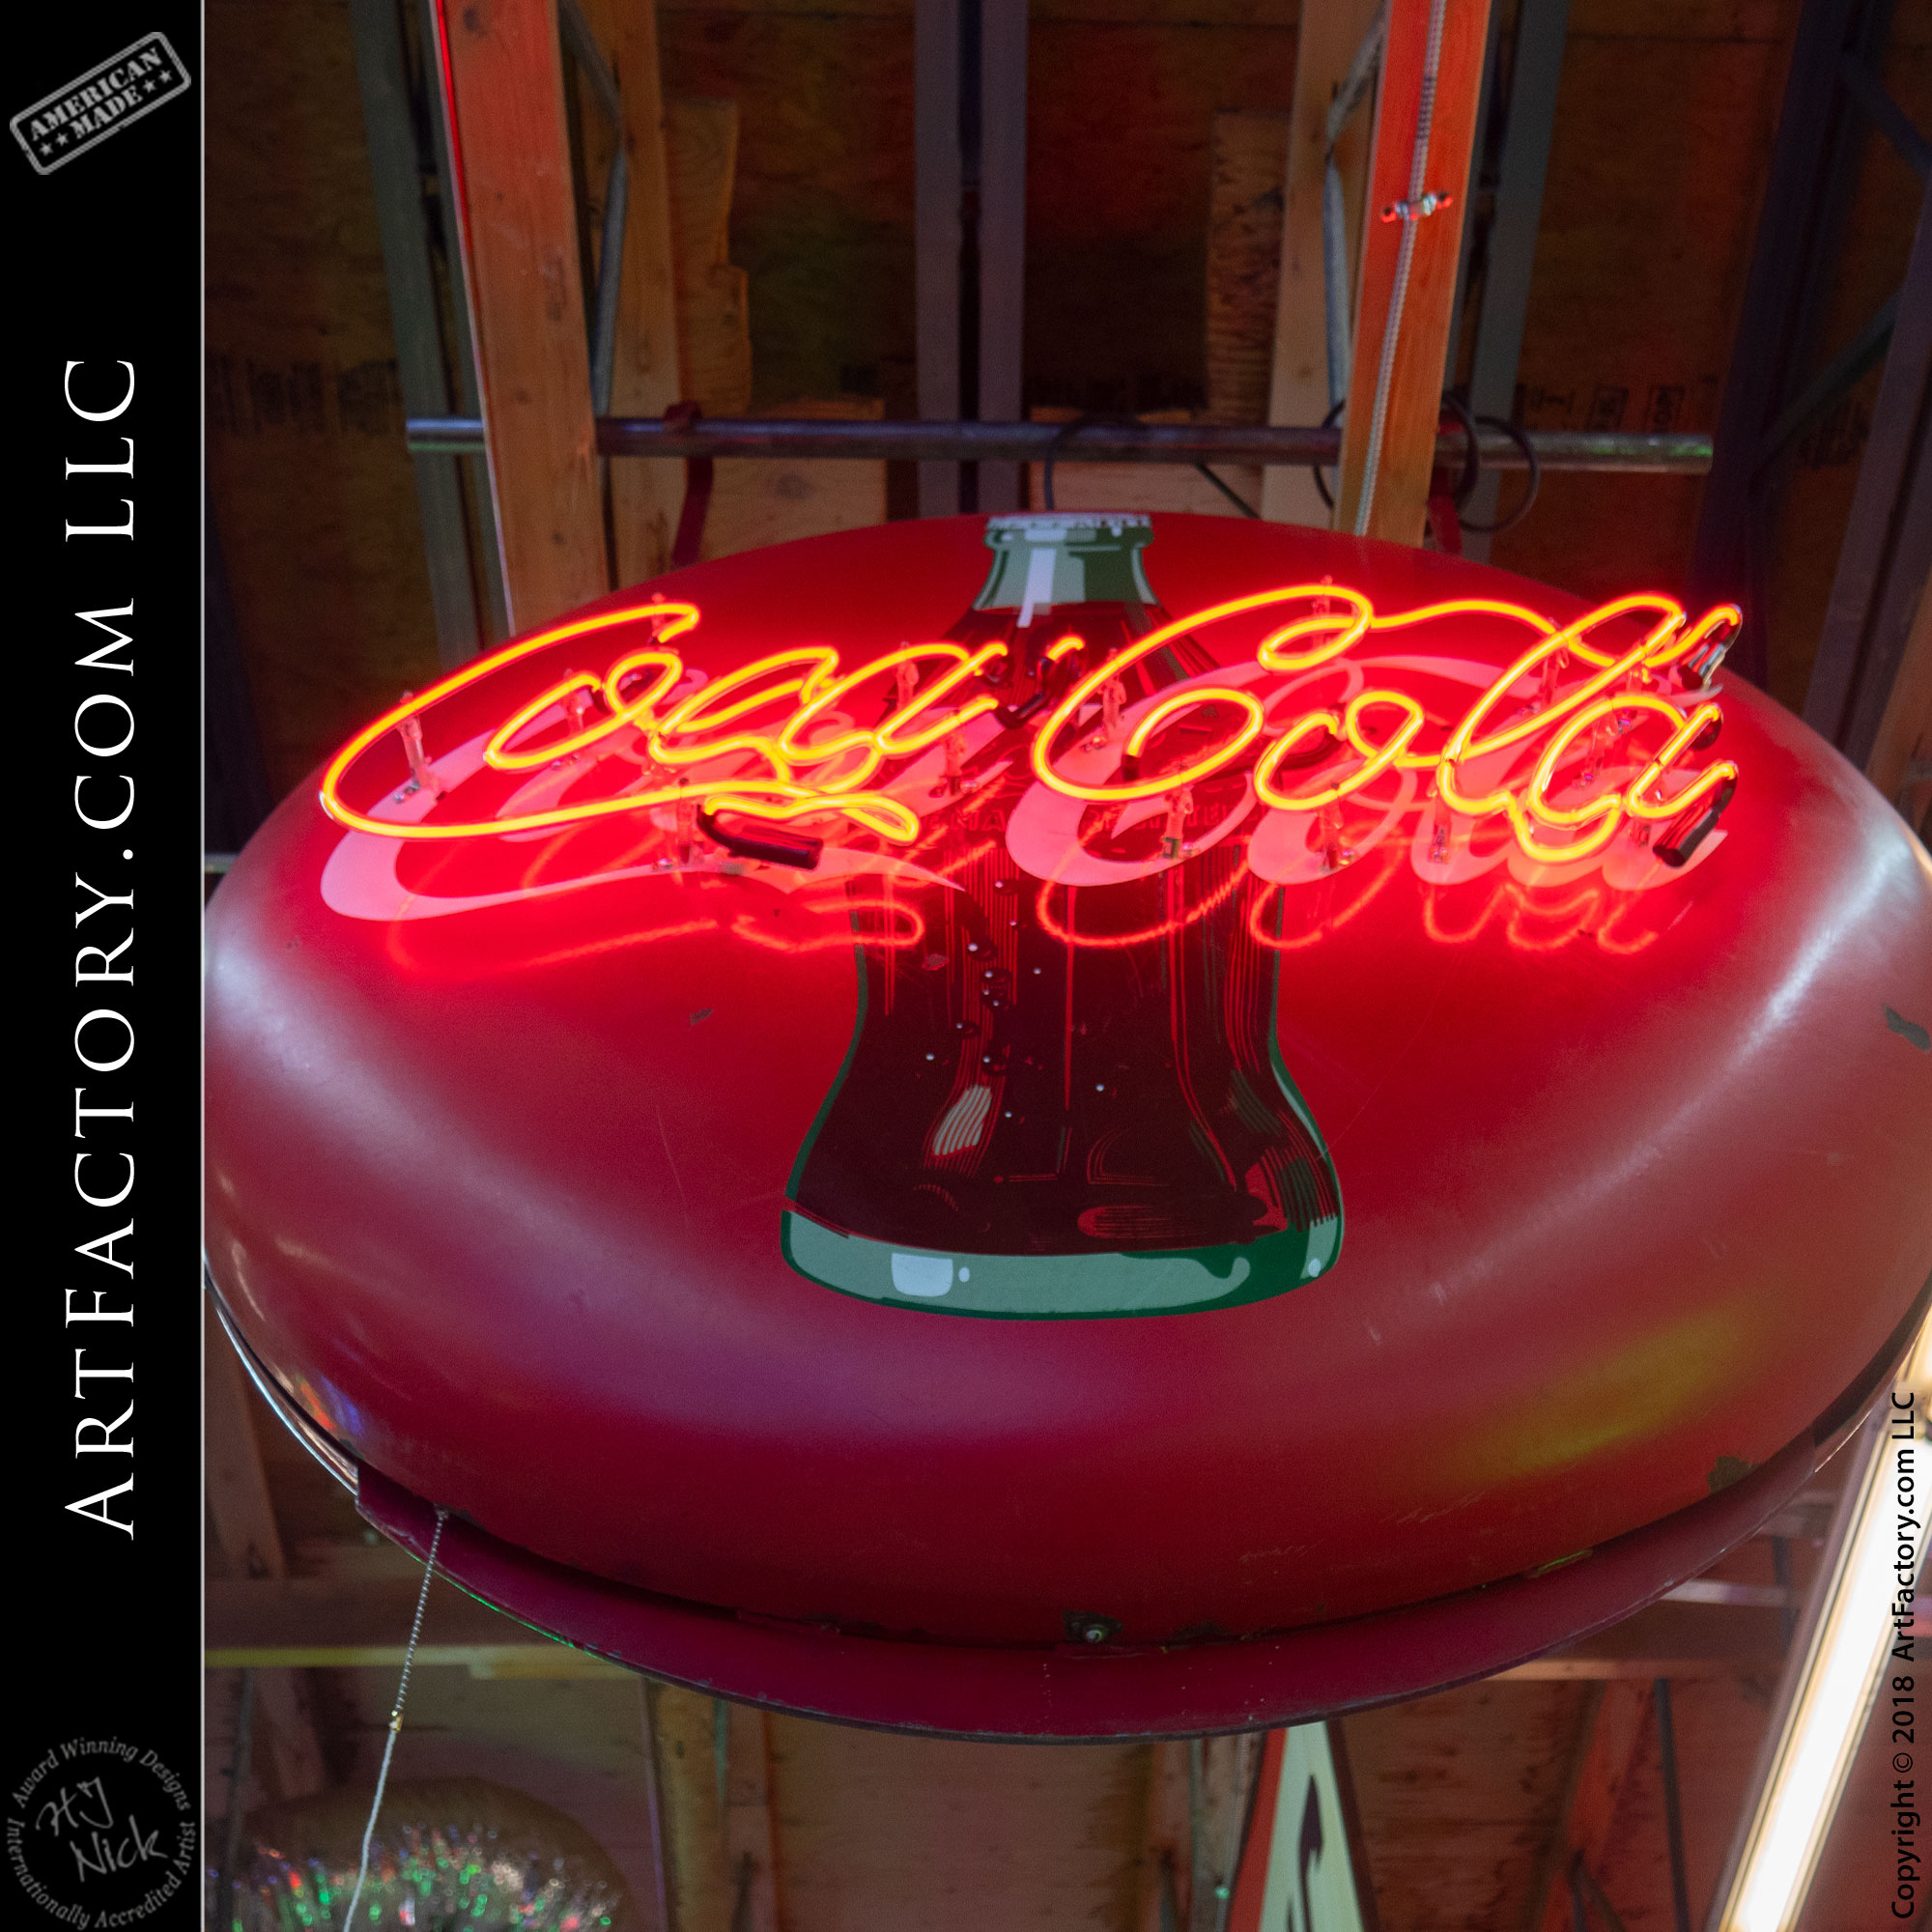 New Round Coke Neon Vintage Road Sign